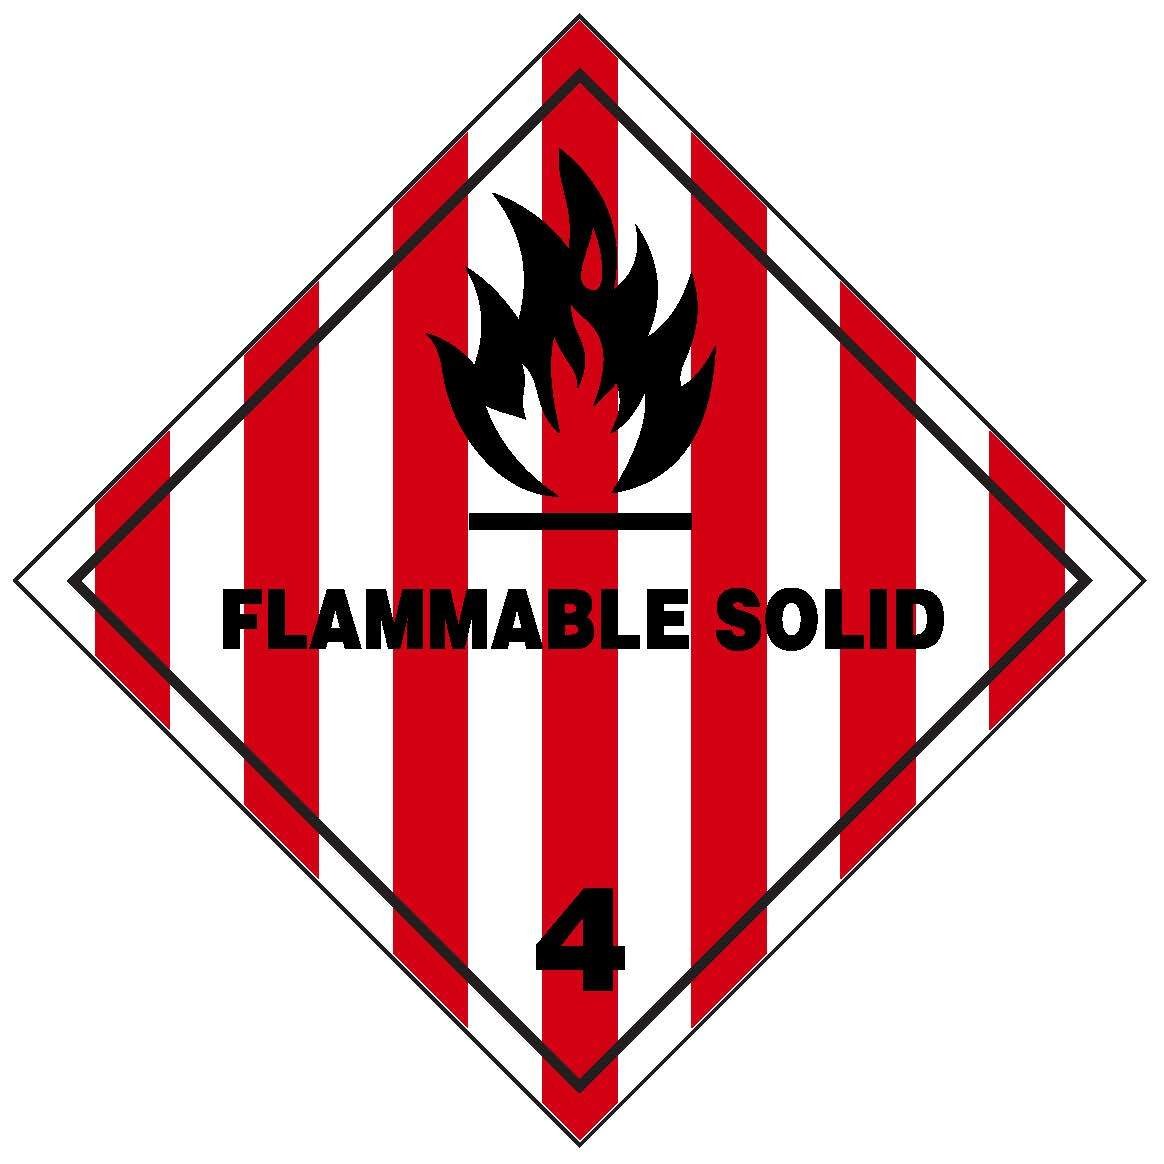 Flammable Solid Hazard Class 4